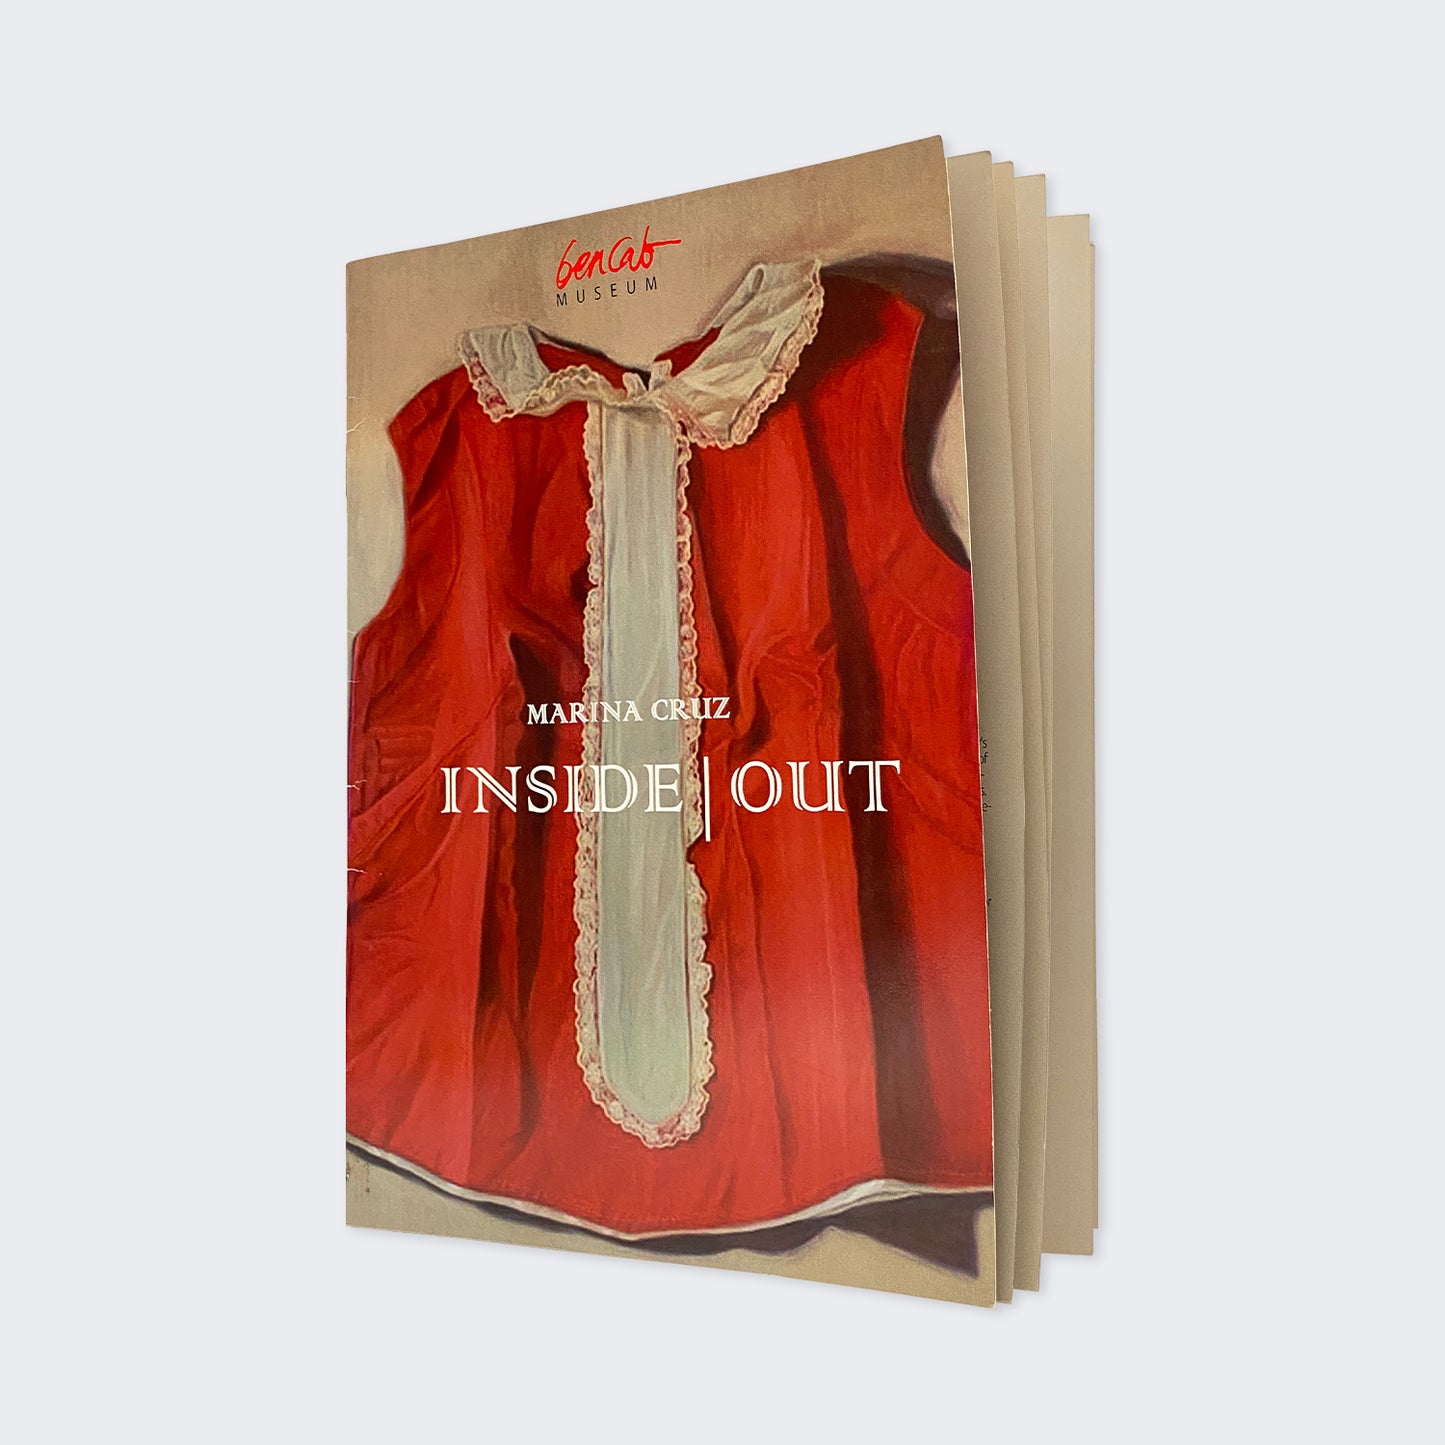 Inside Out by Marina Cruz (Paperback)